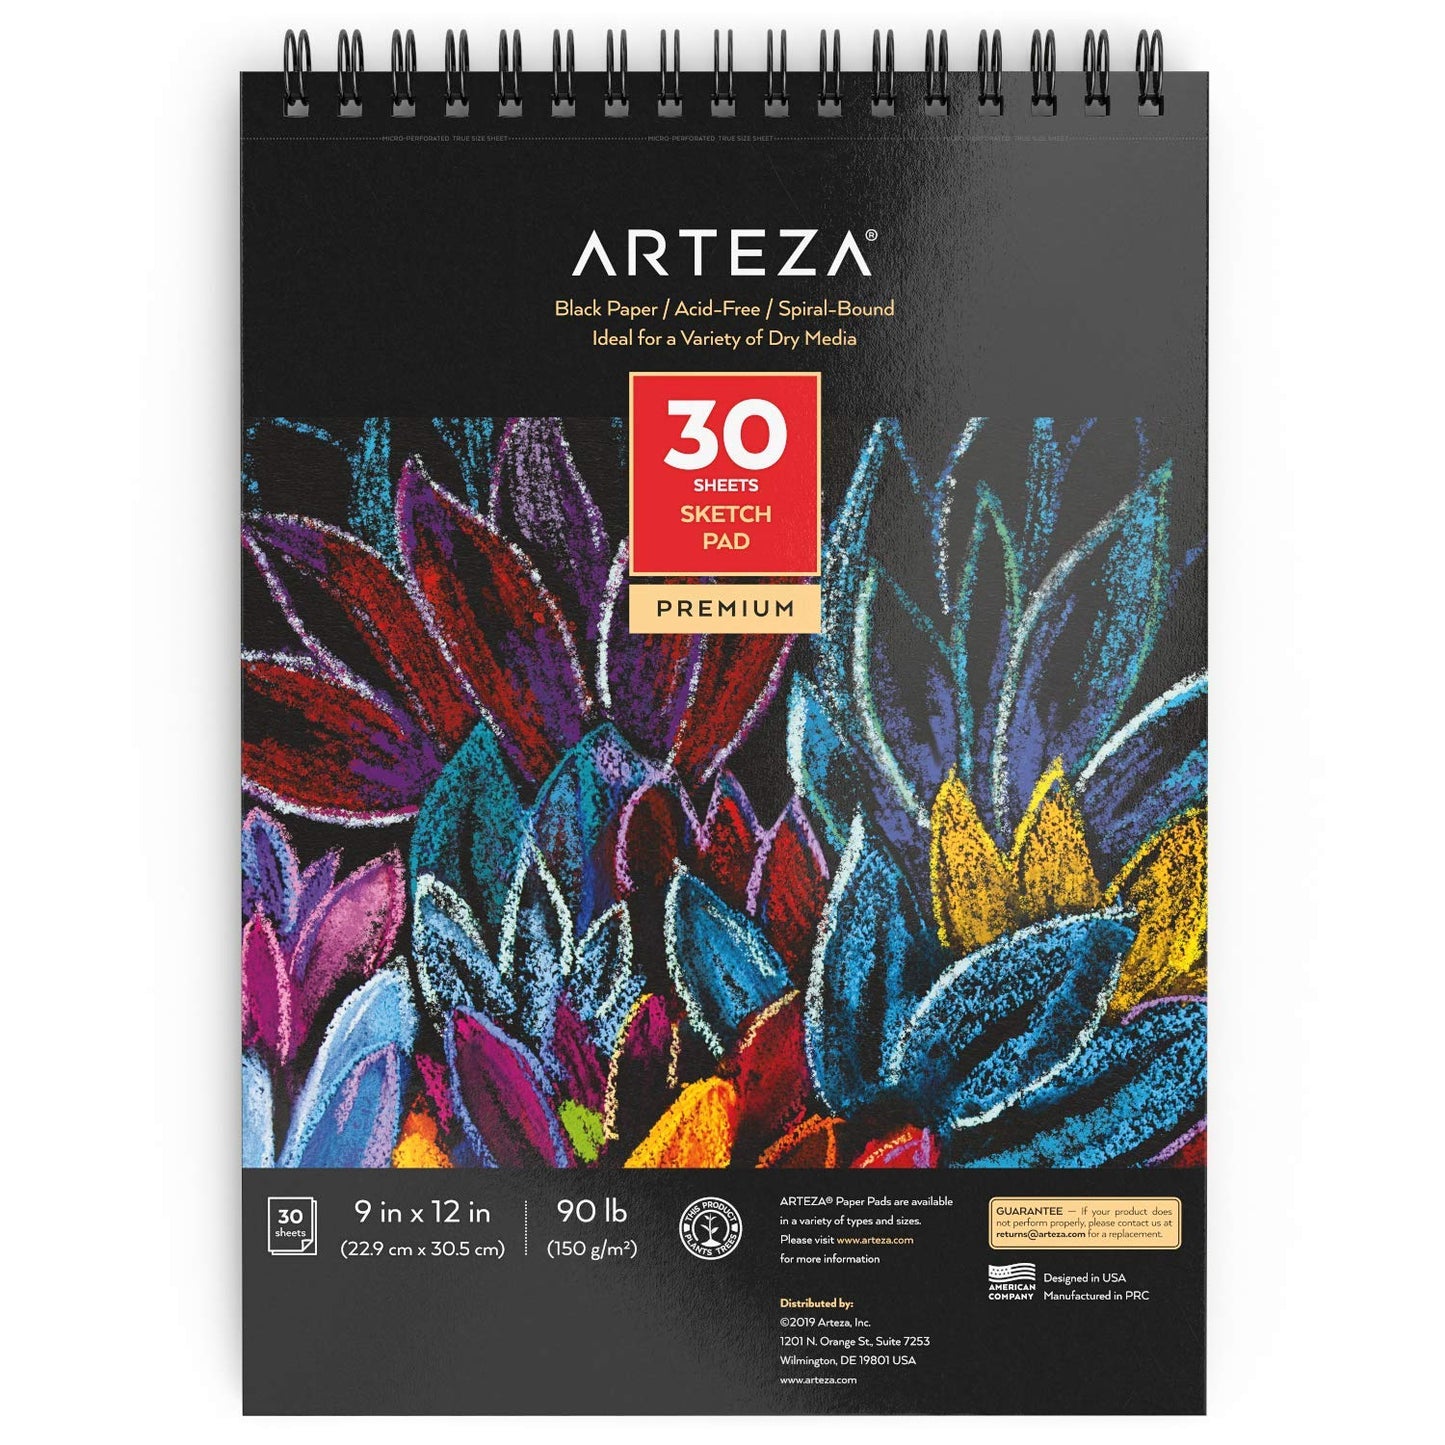 Arteza Black Paper Sketch Pad, 9" x 12", 30 Sheets - Pack of 2